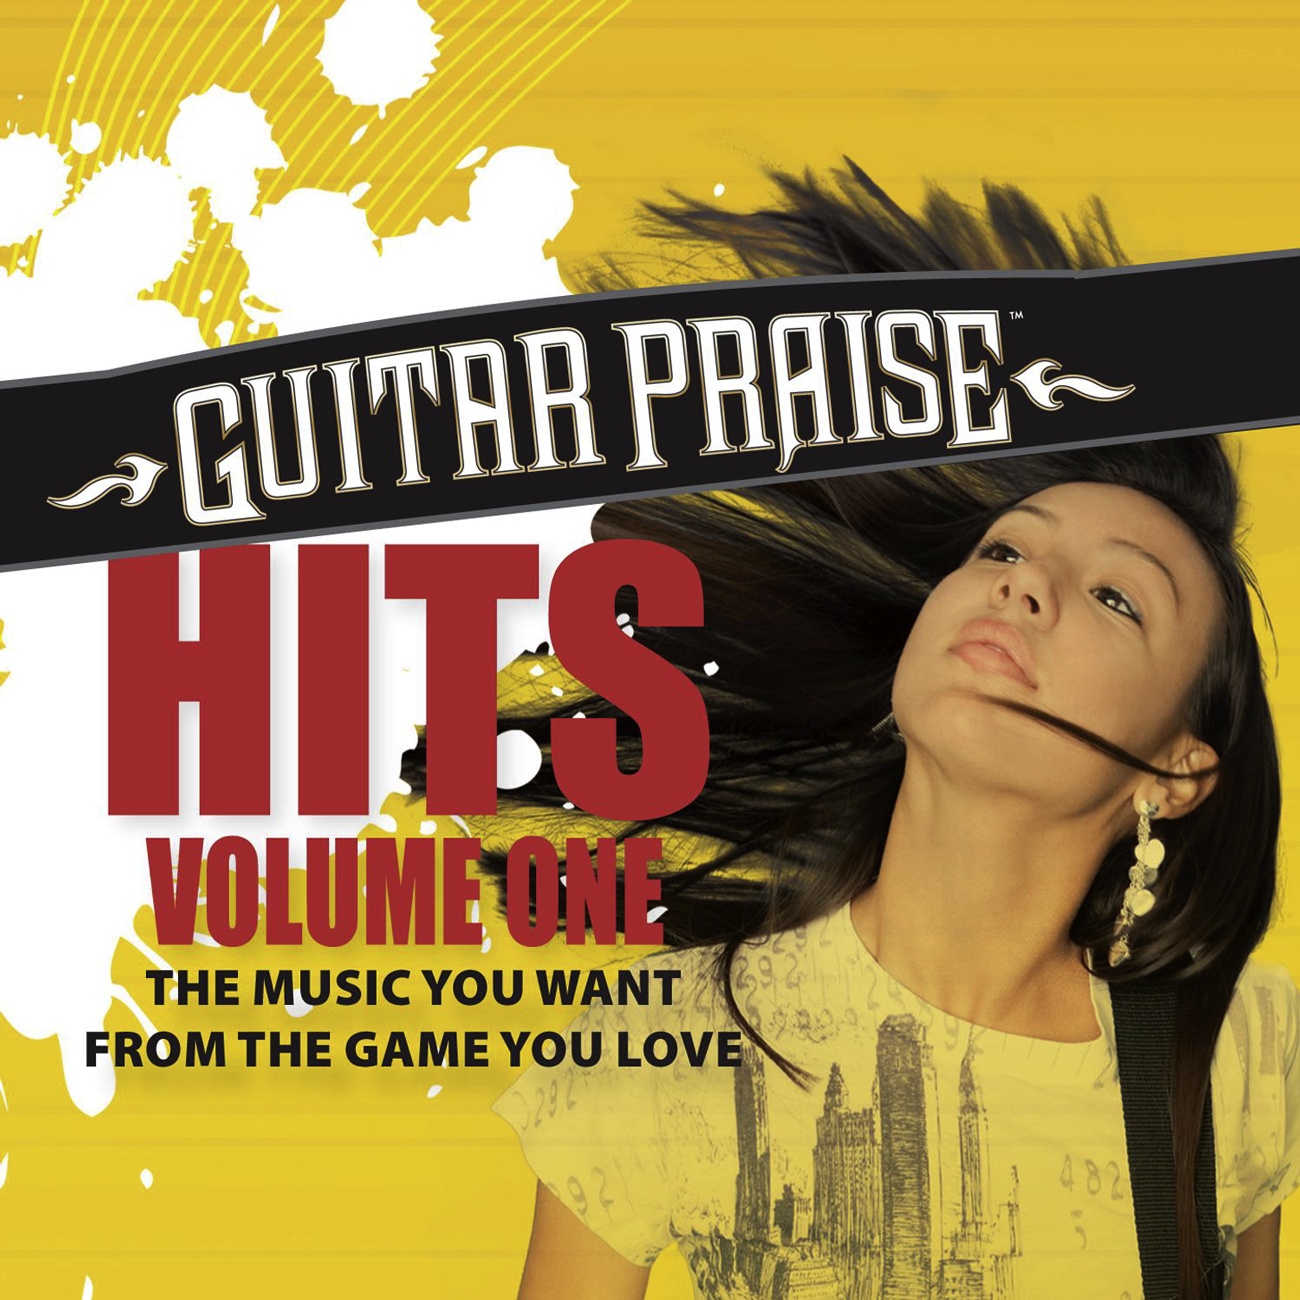 Guitar Praise HITS Volume One